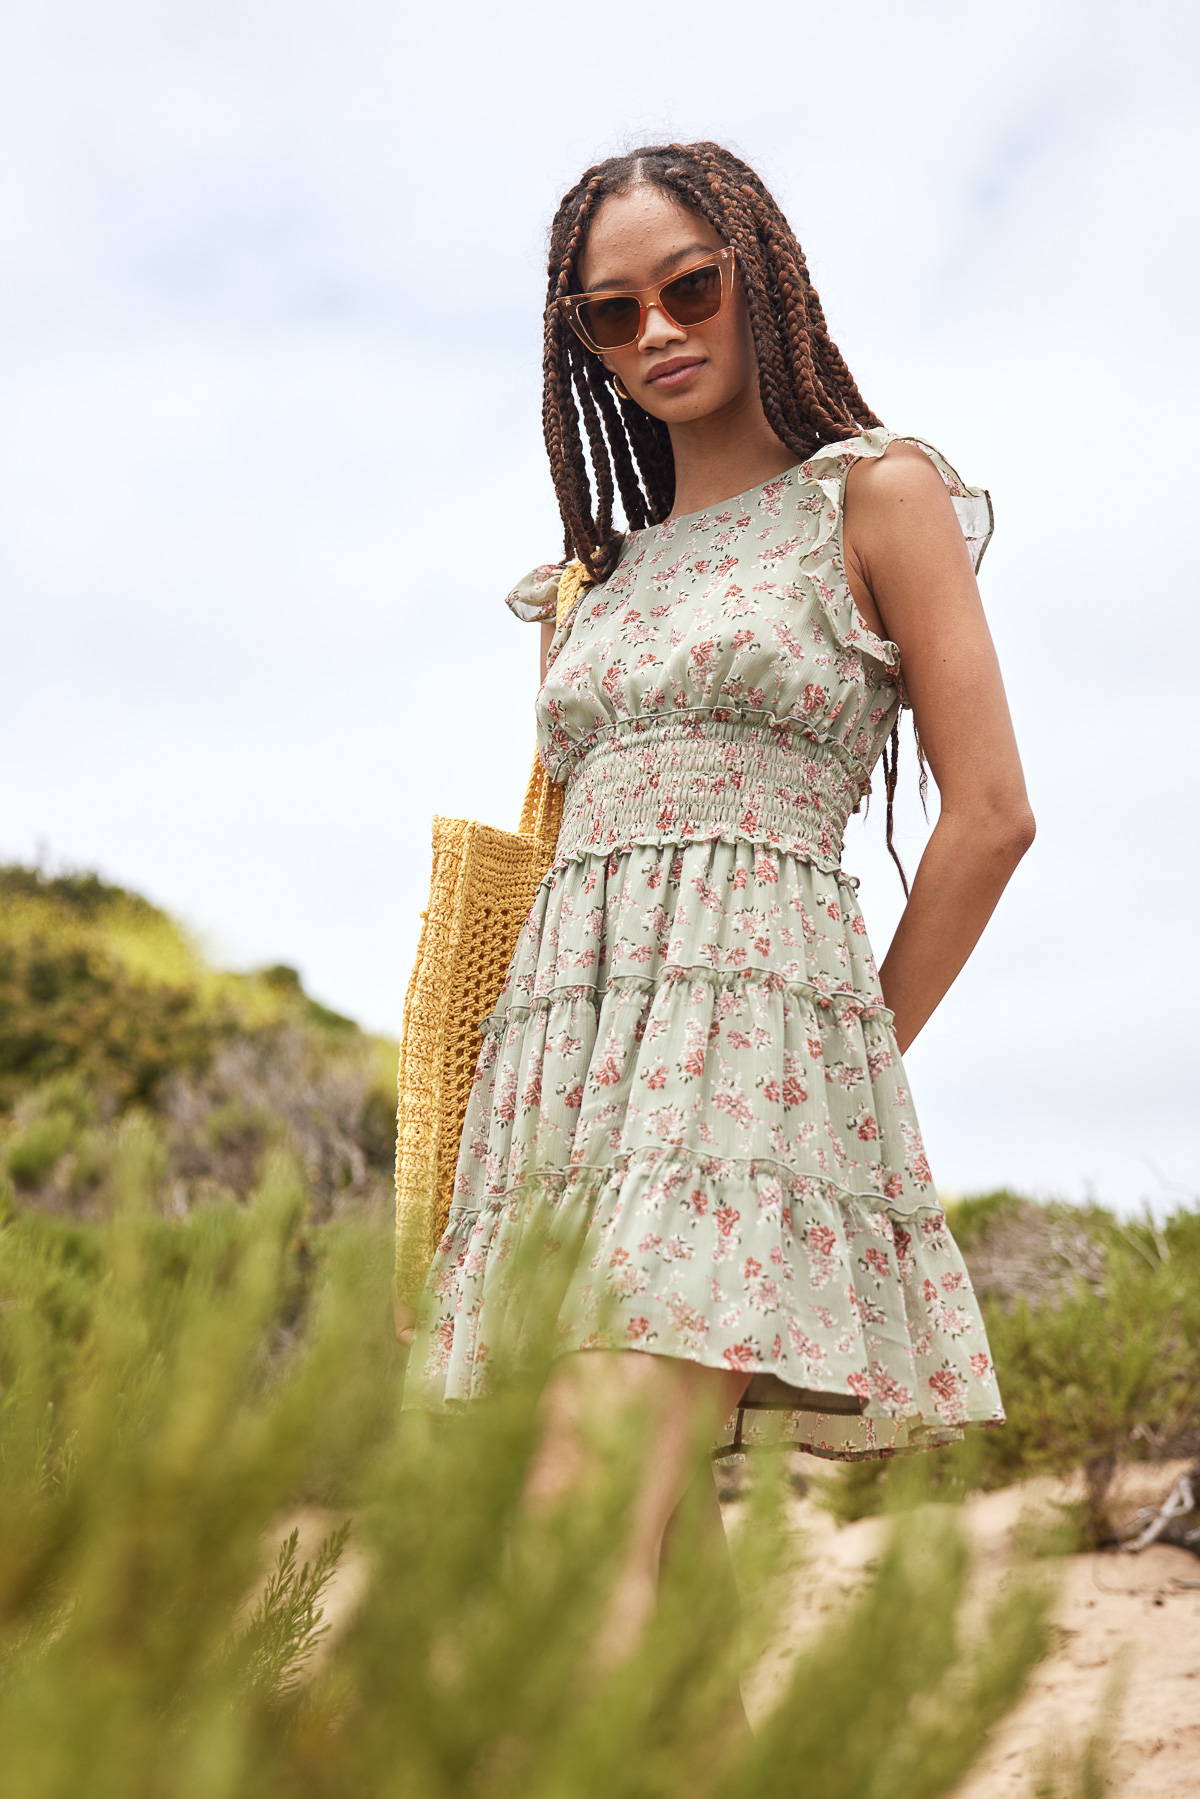 Trixxi sun-kissed summer, girl at beach in sage floral mini dress.